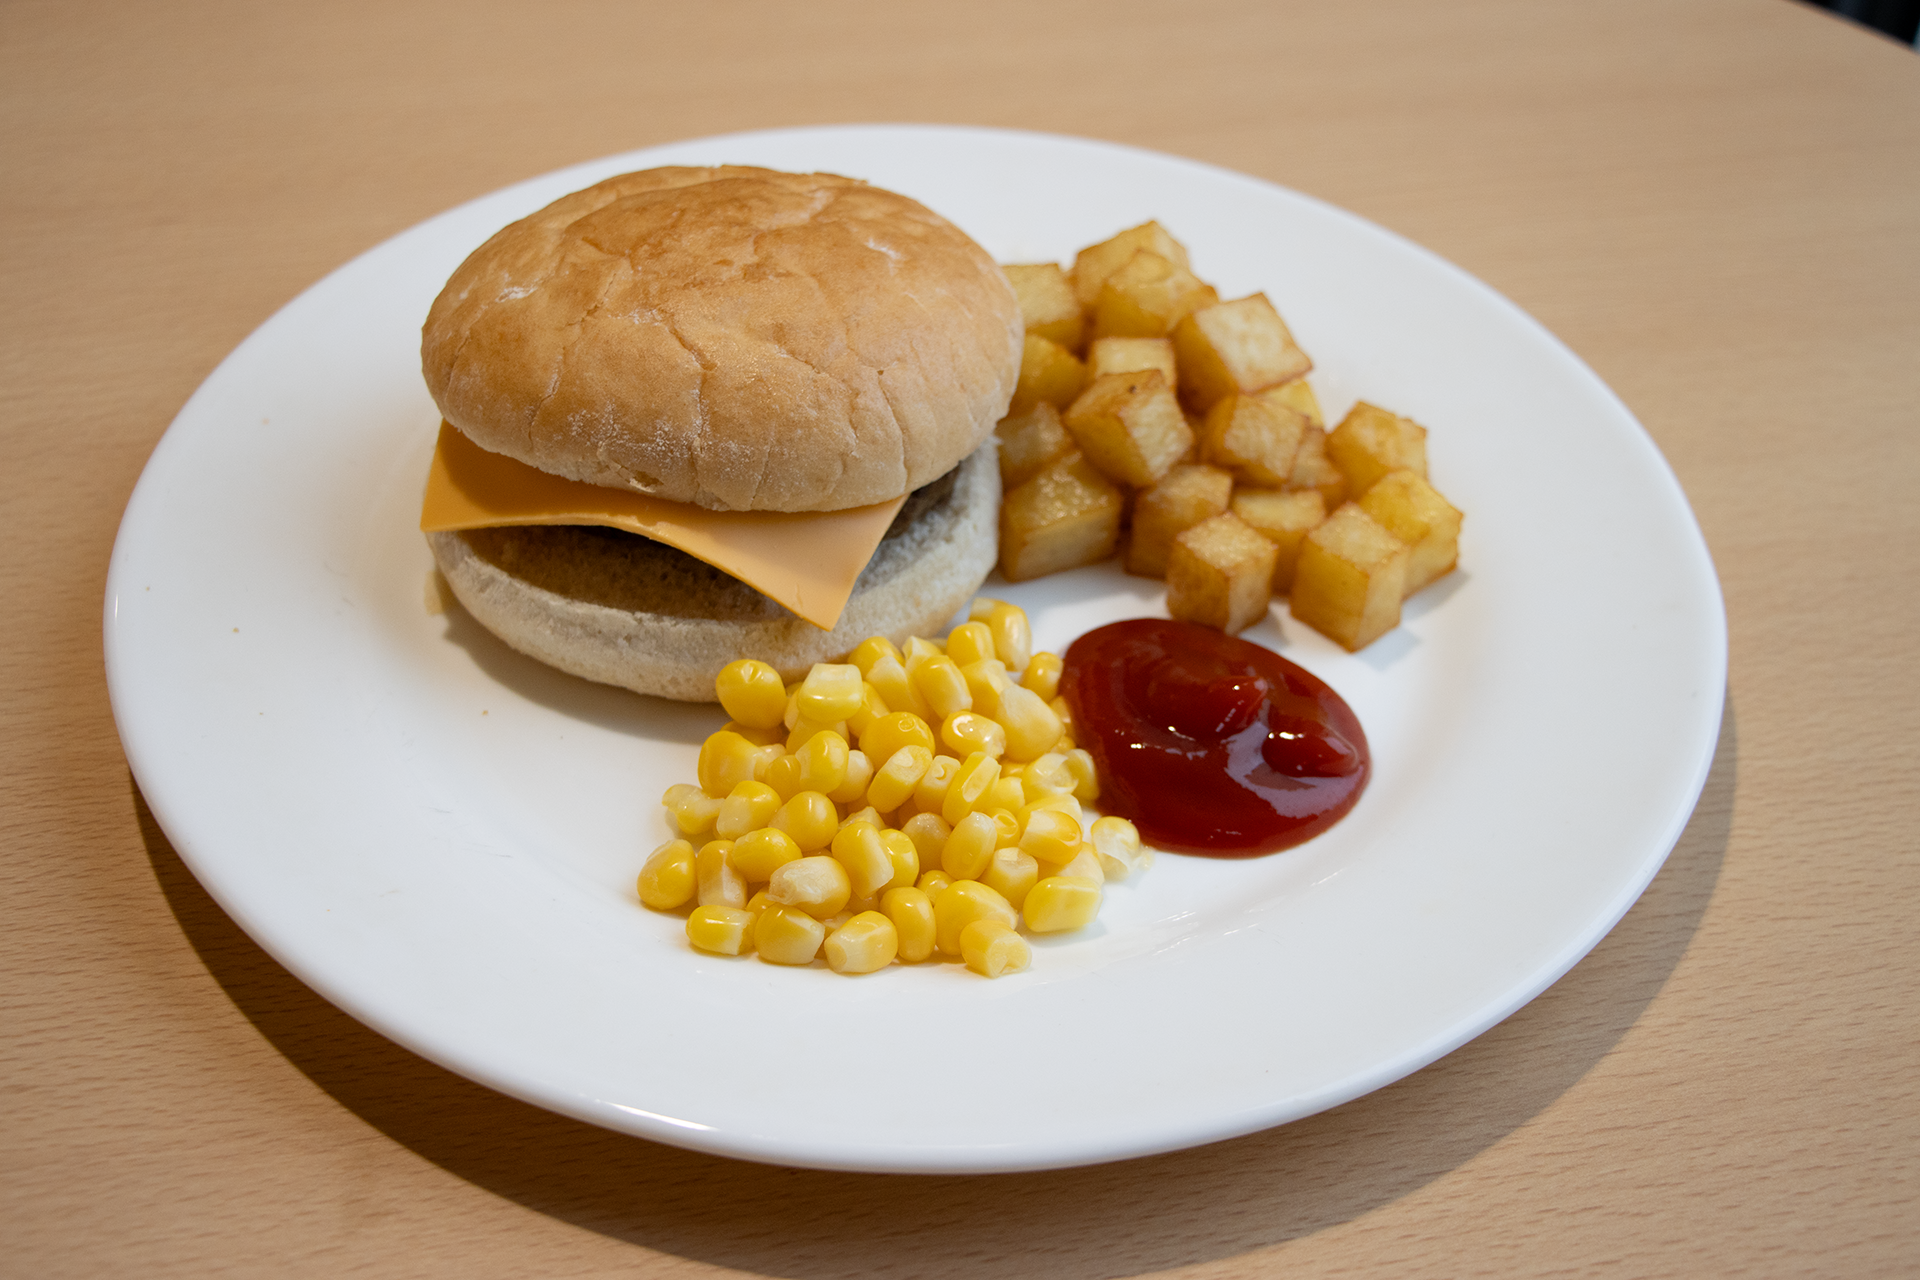 Dartmoor Beef Burger with Ketchup, Diced Potato and Sweetcorn